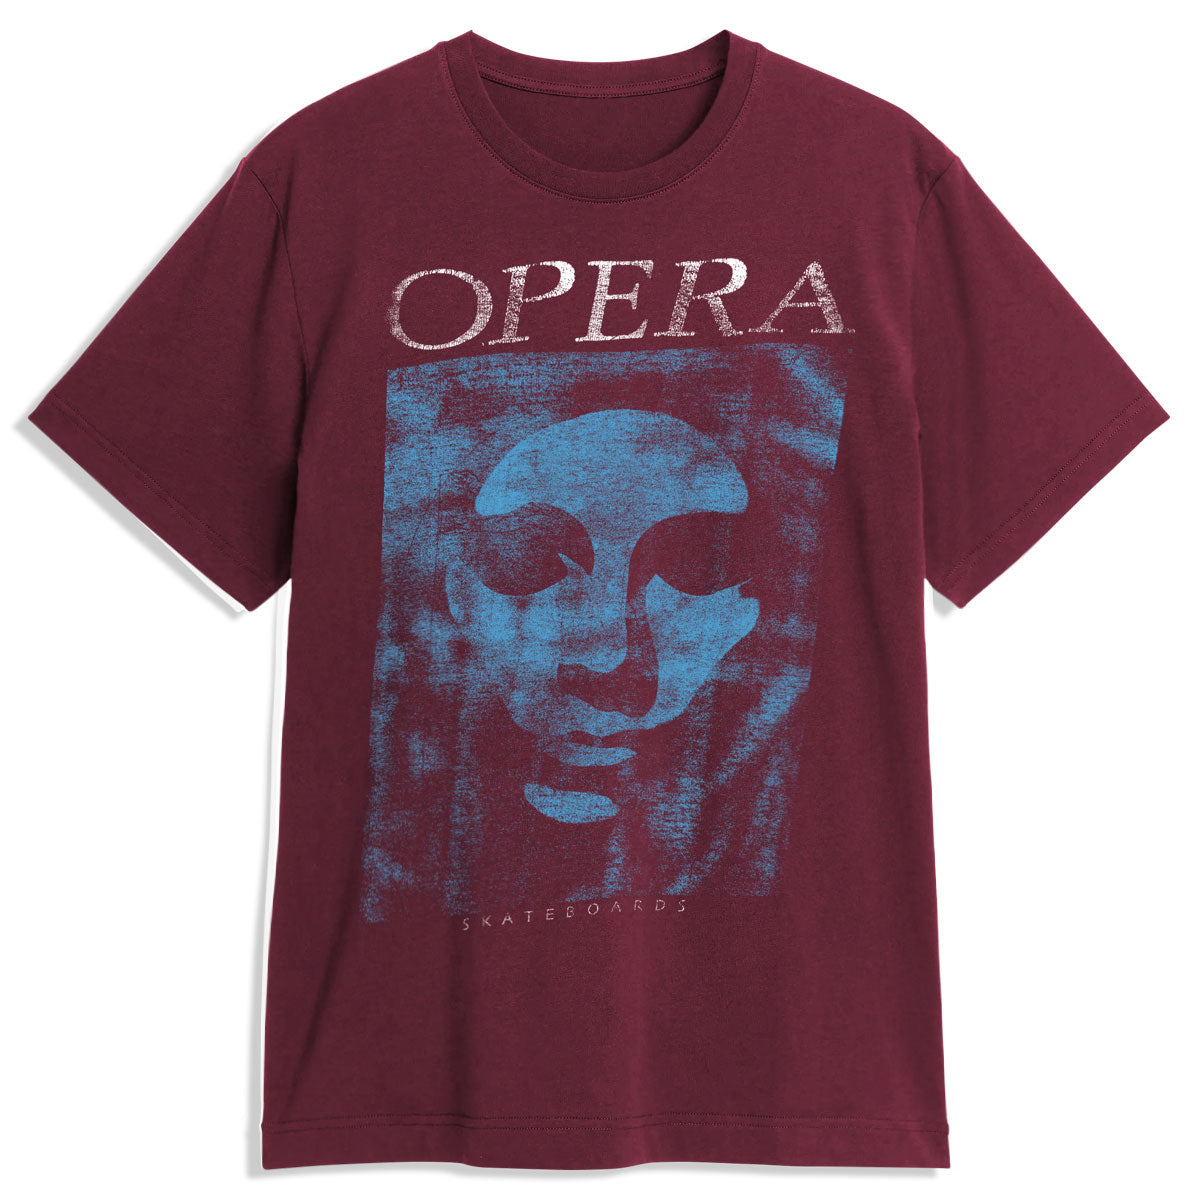 Opera Mask Vintage Premium T-Shirt - Dark Maroon image 1